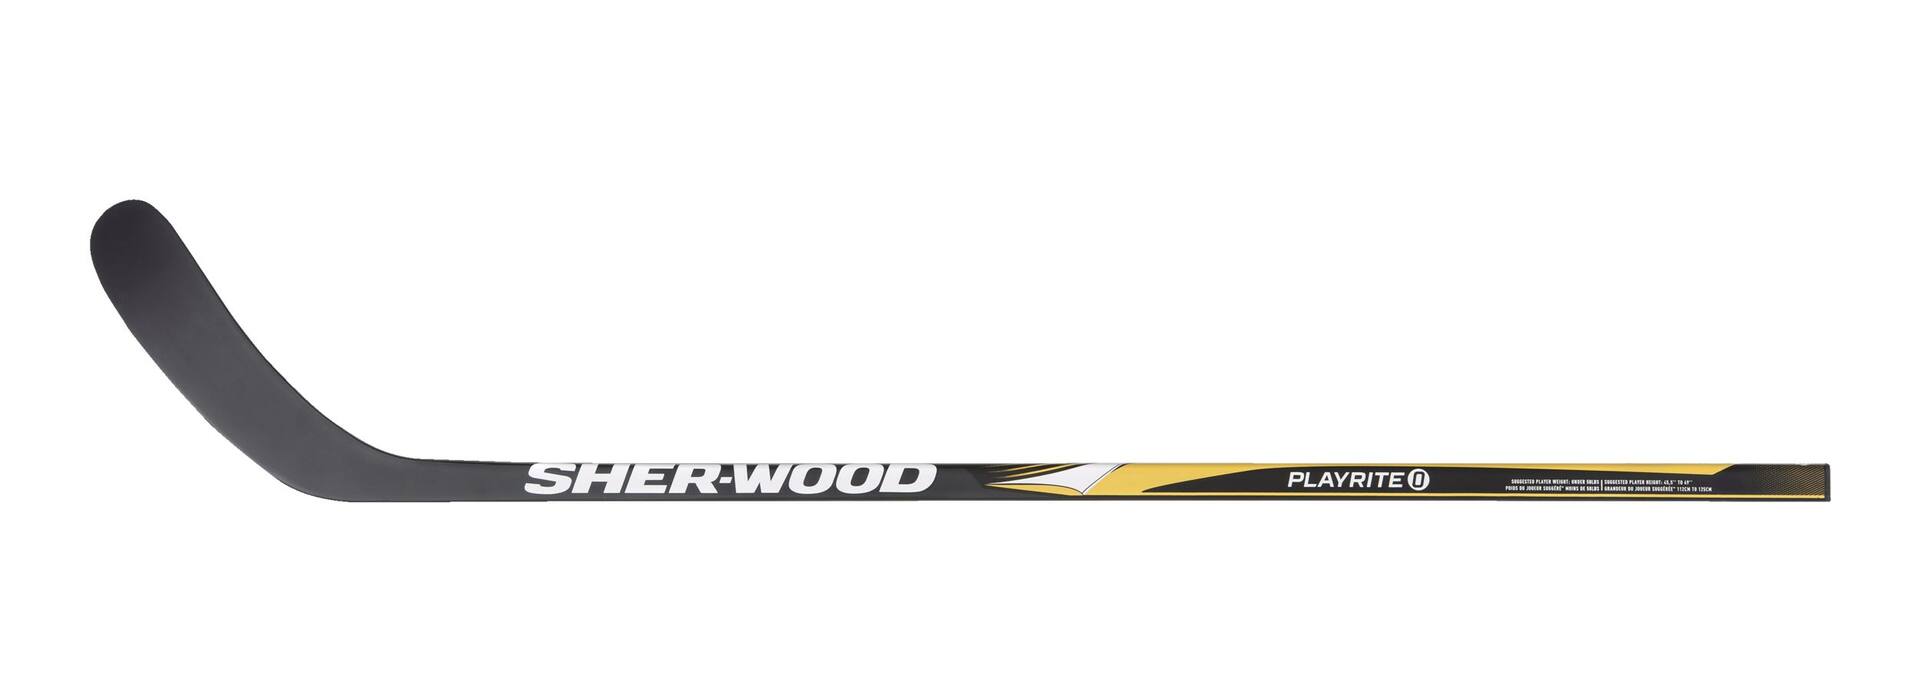 Sherwood PlayRite 0 Youth Composite Hockey Stick, 20 Flex